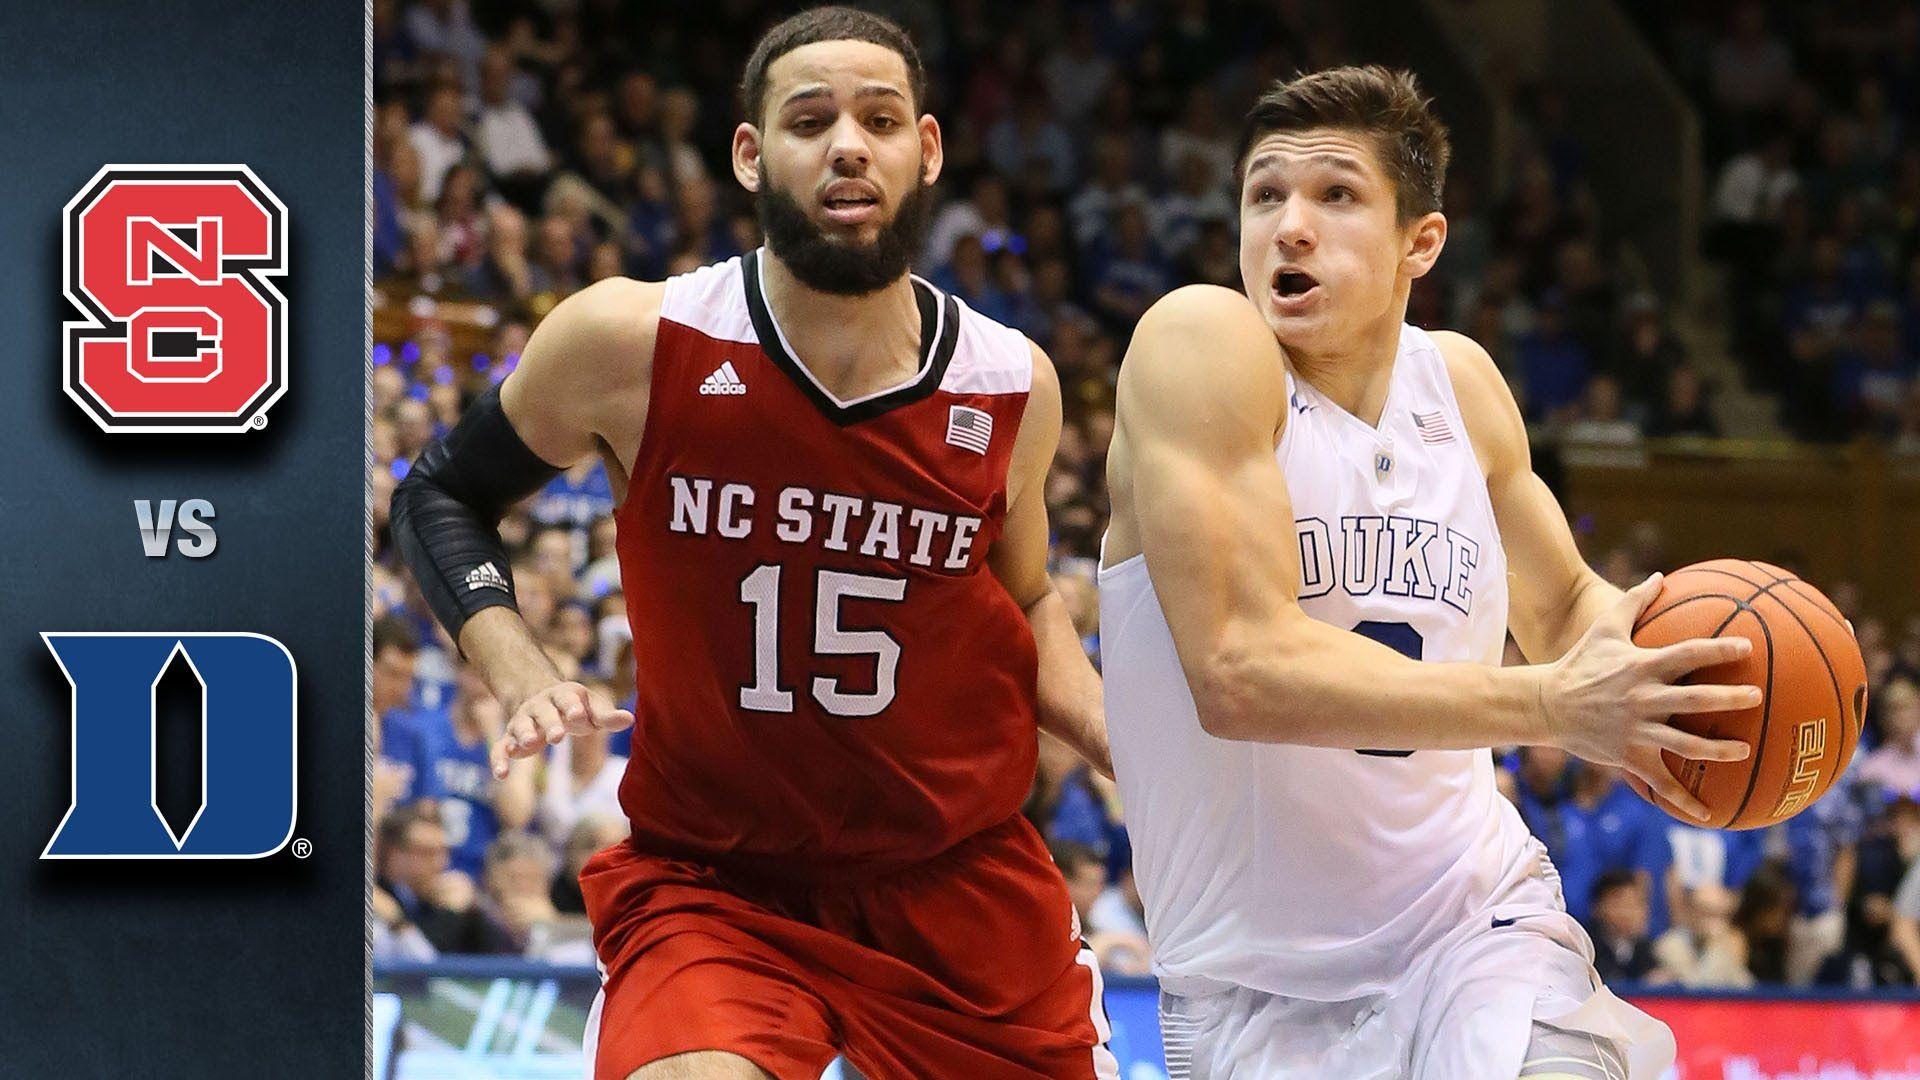 NC State Vs. Duke Basketball Highlights (2015 16)